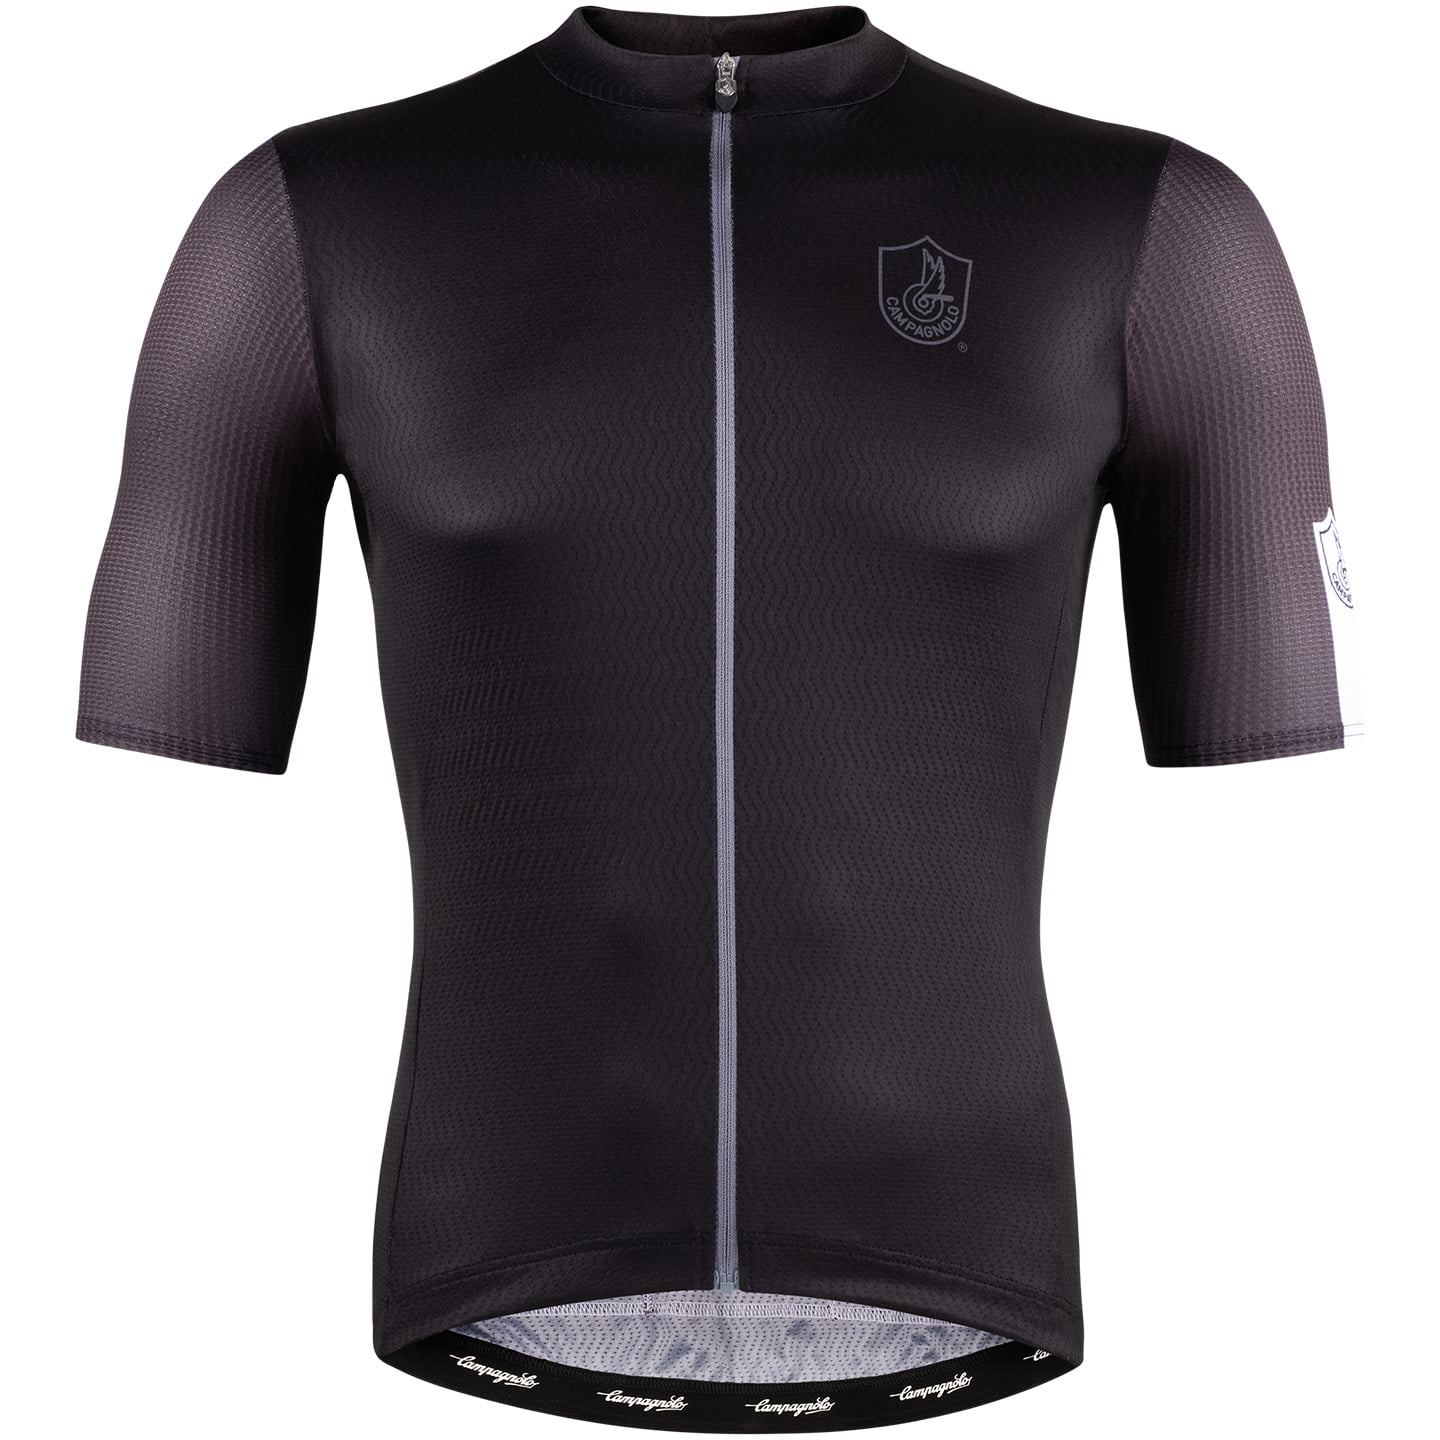 CAMPAGNOLO Indio Short Sleeve Jersey Short Sleeve Jersey, for men, size L, Cycling jersey, Cycling clothing